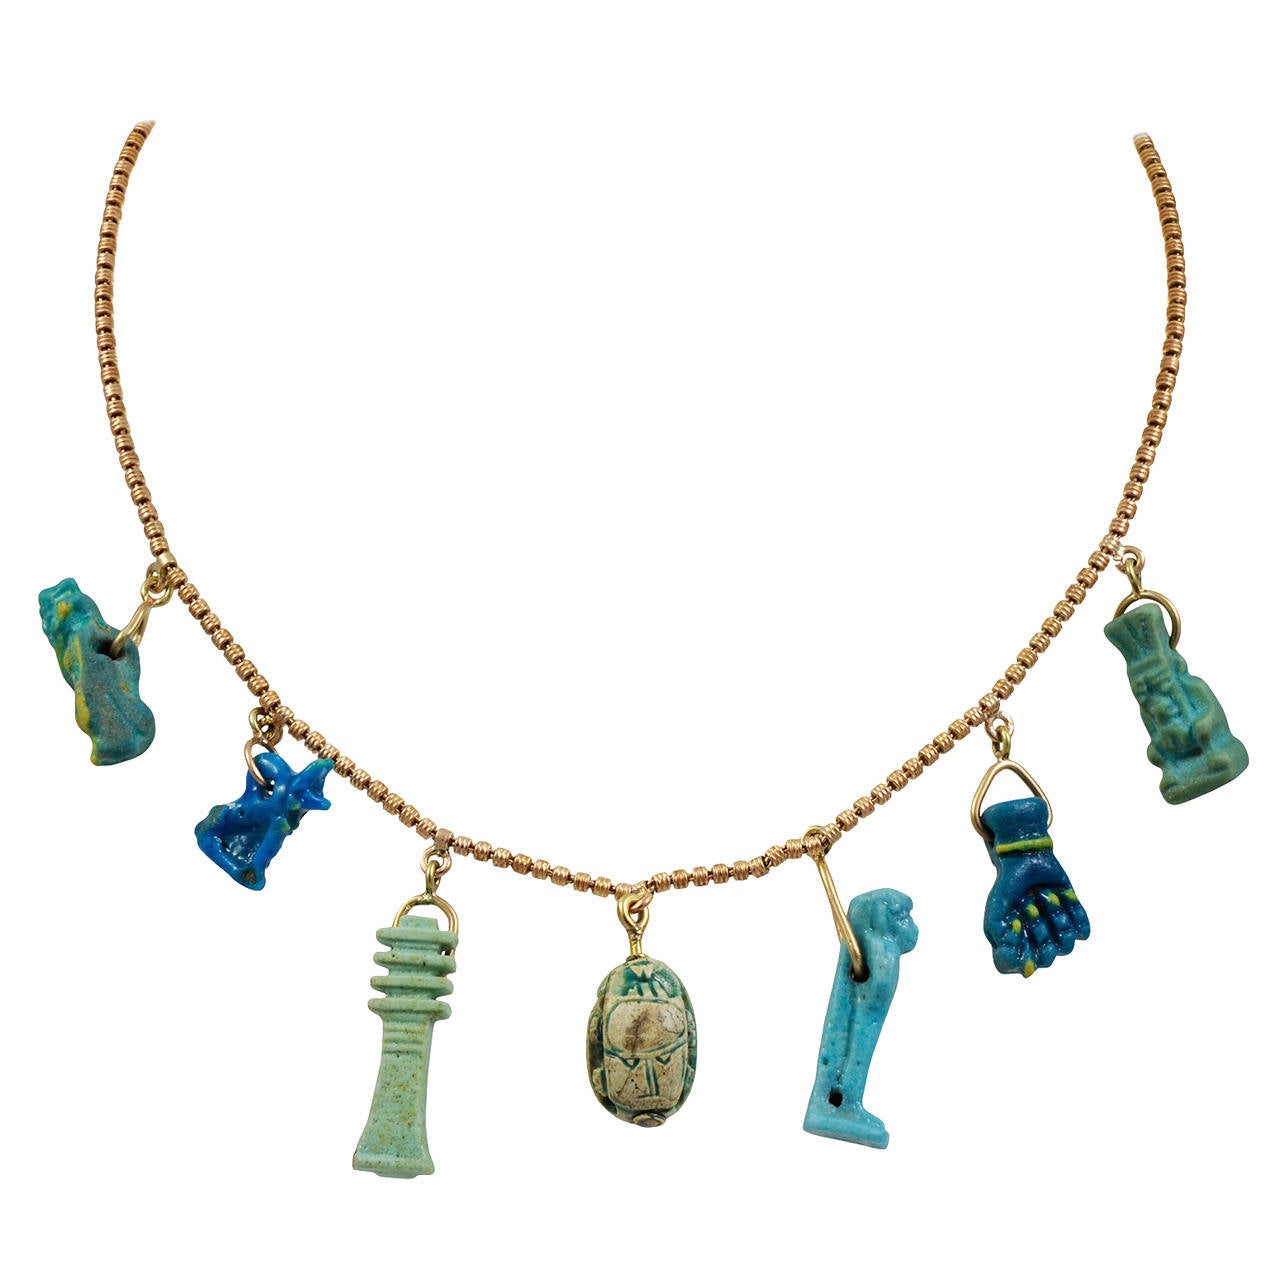 Intricate Victorian Gold Chain Suspending Seven Ancient Pendants